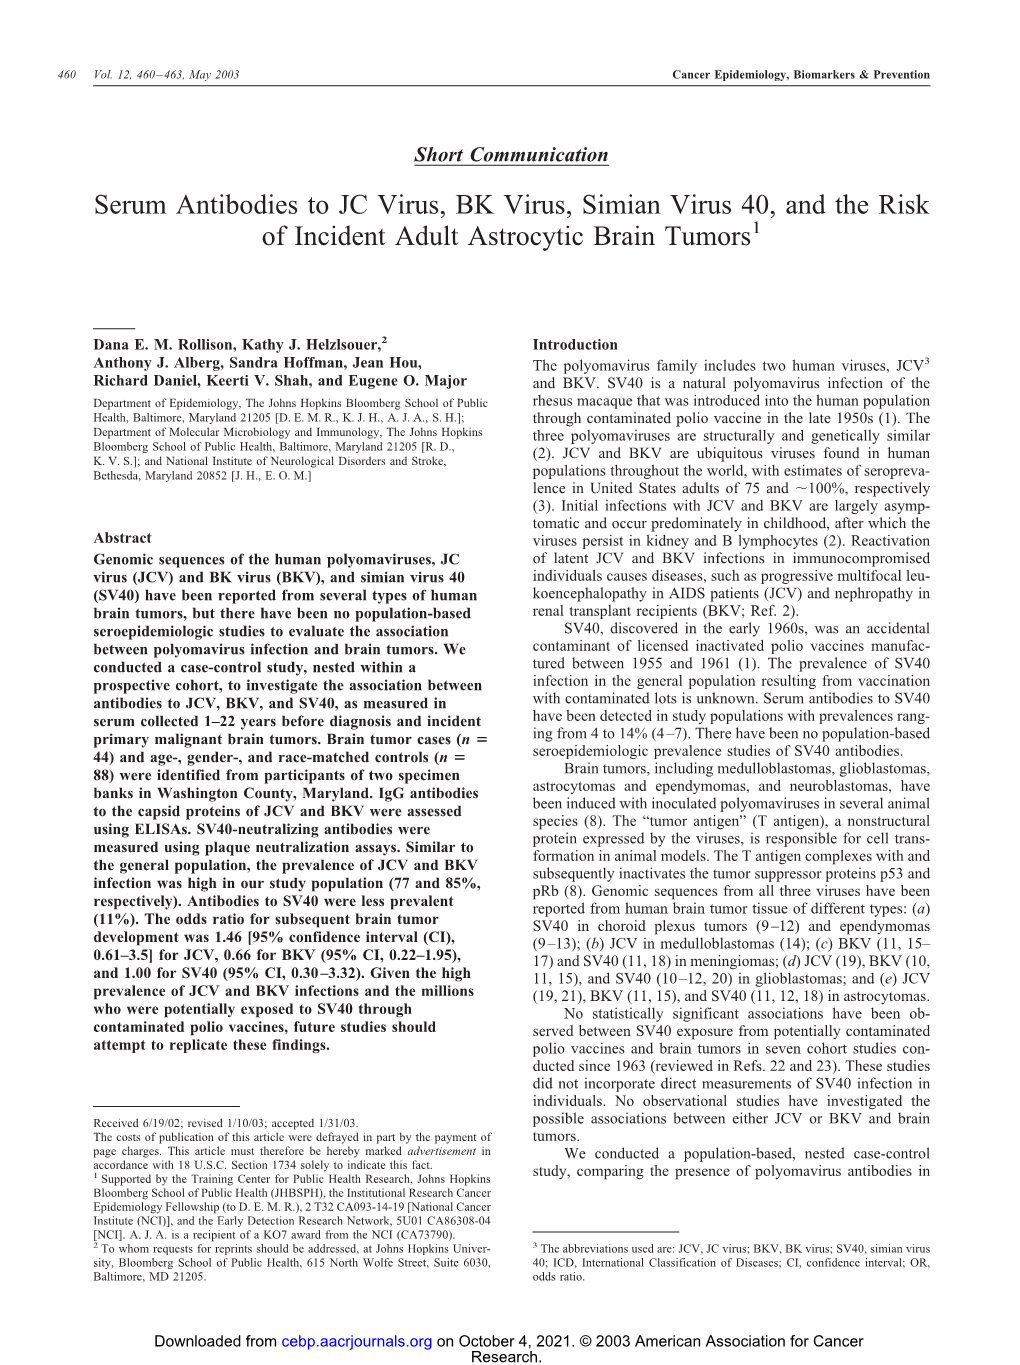 Serum Antibodies to JC Virus, BK Virus, Simian Virus 40, and the Risk of Incident Adult Astrocytic Brain Tumors1